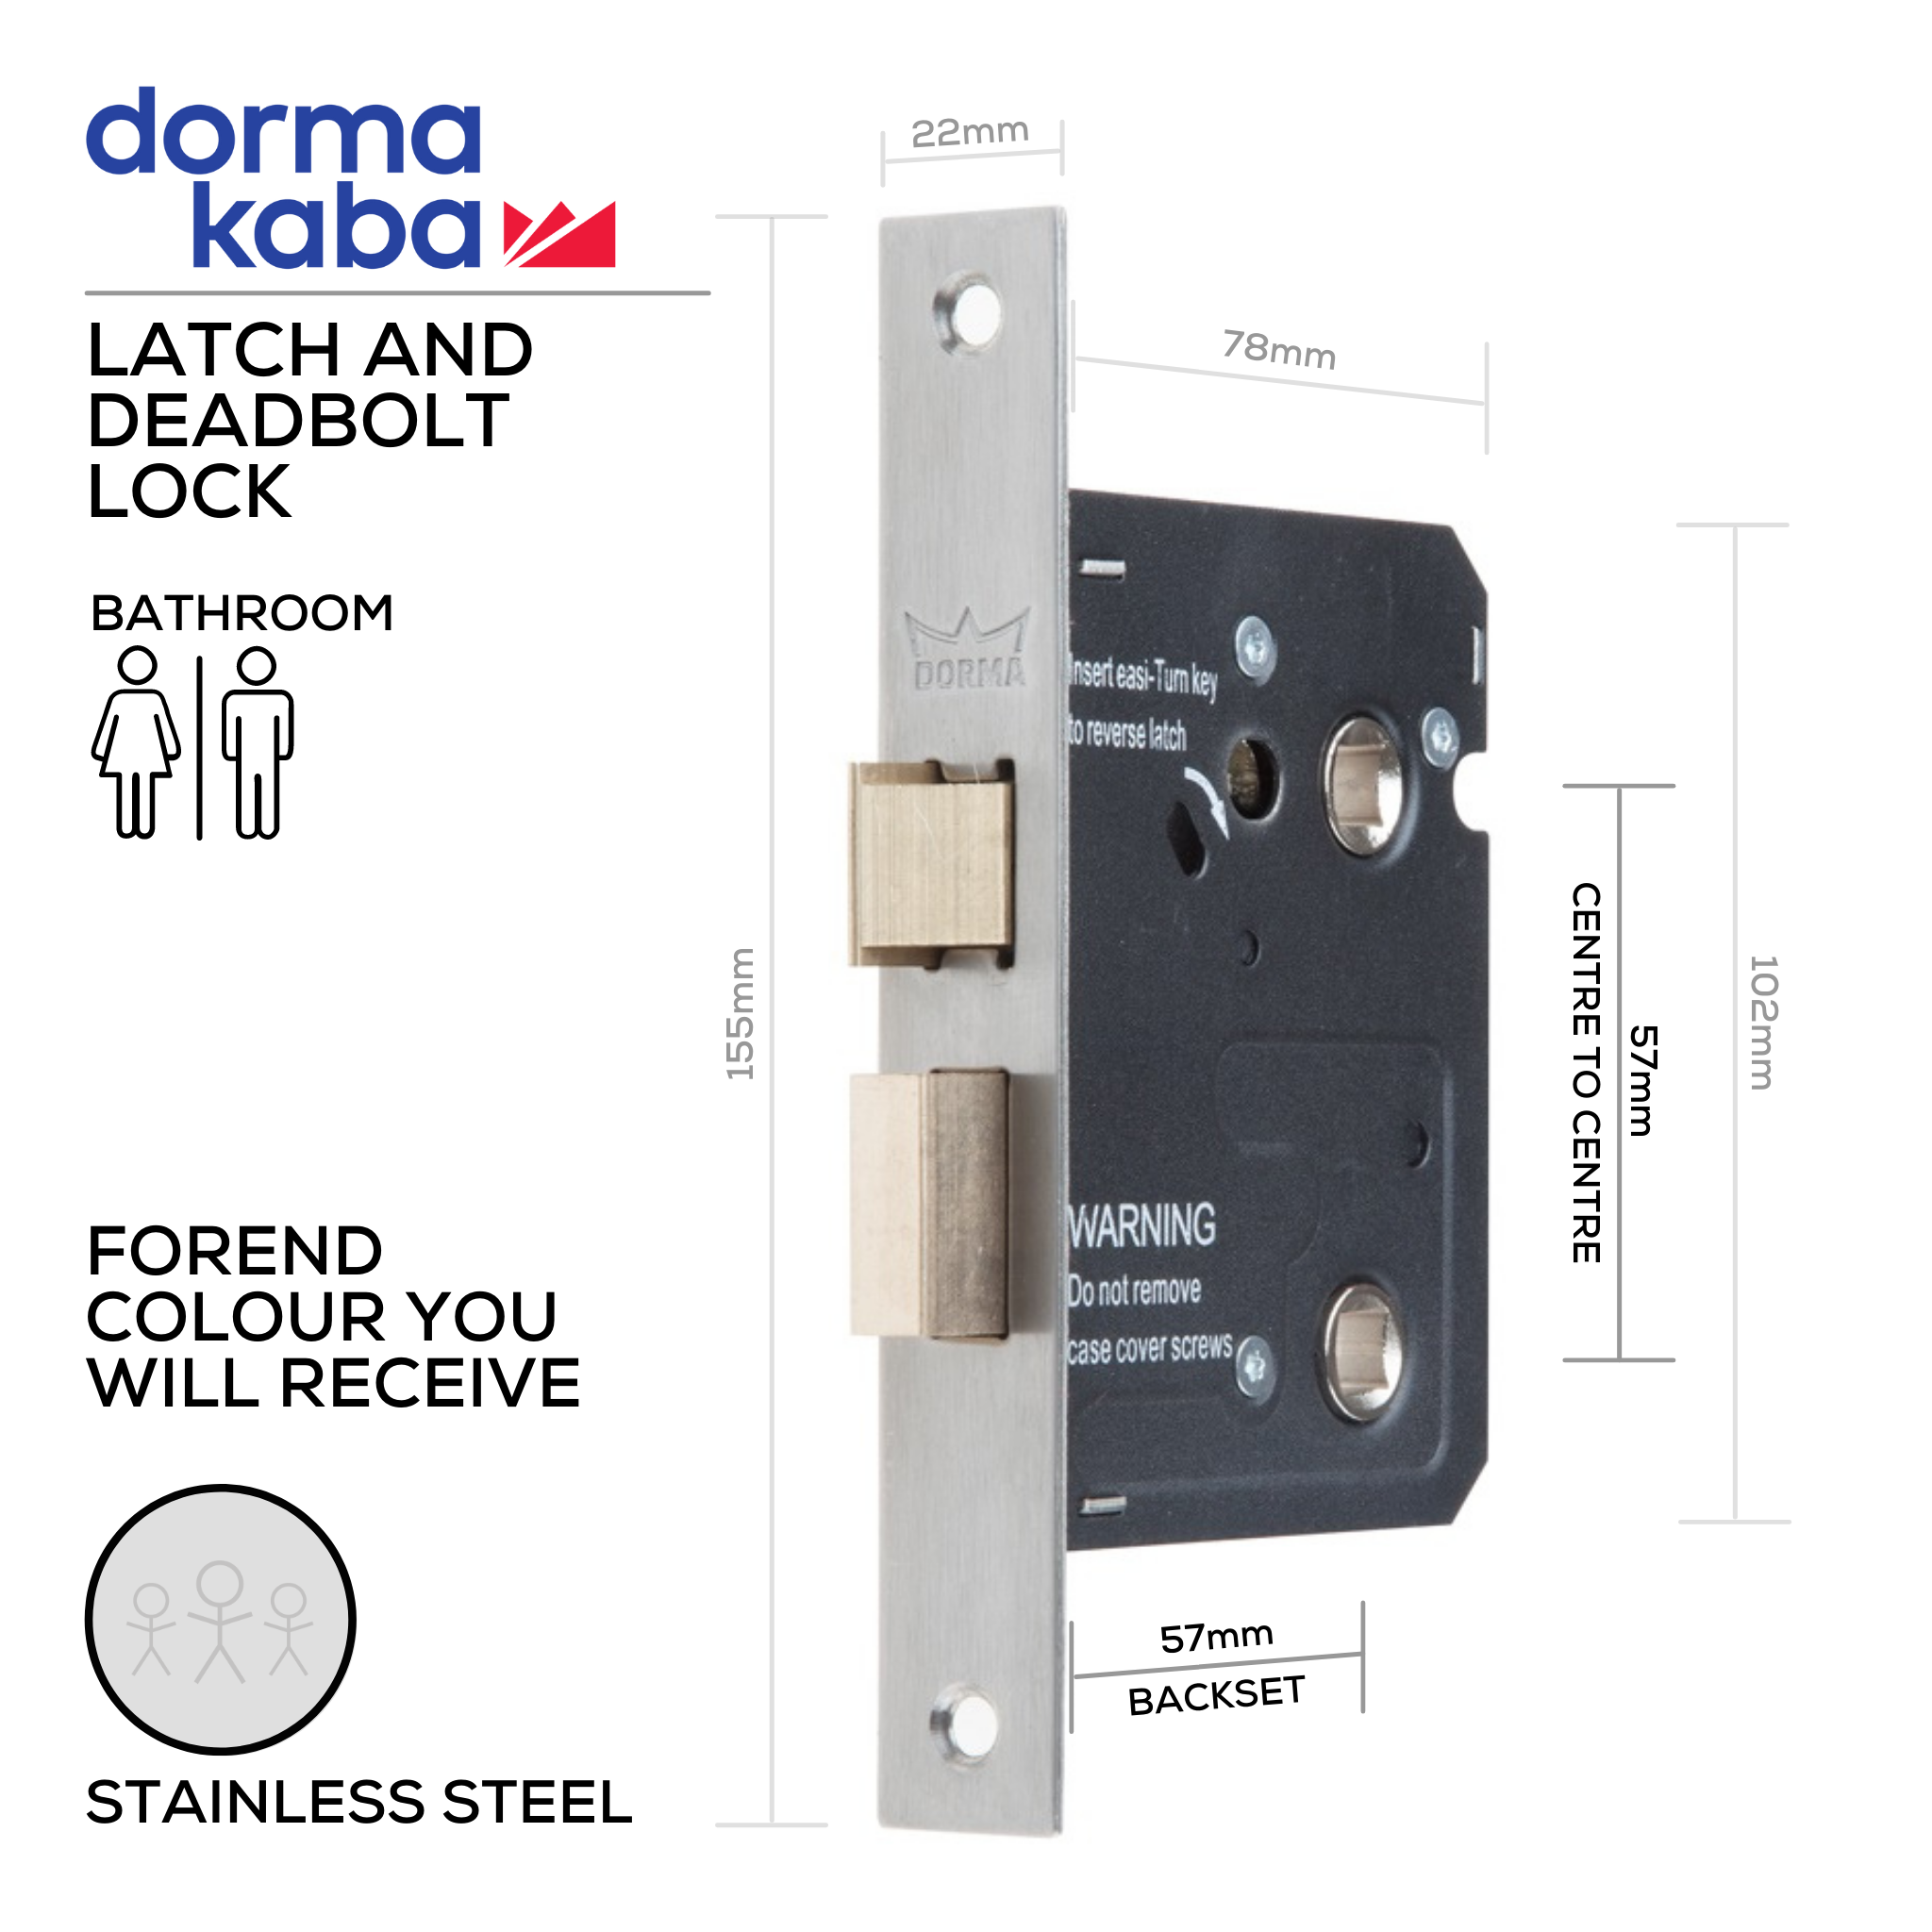 D035S Stainless Steel, Bathroom, Latch & Deadbolt Lock, WC Thumbturn Hardware, 57mm (Backset) x 57mm (ctc), Stainless Steel, DORMAKABA